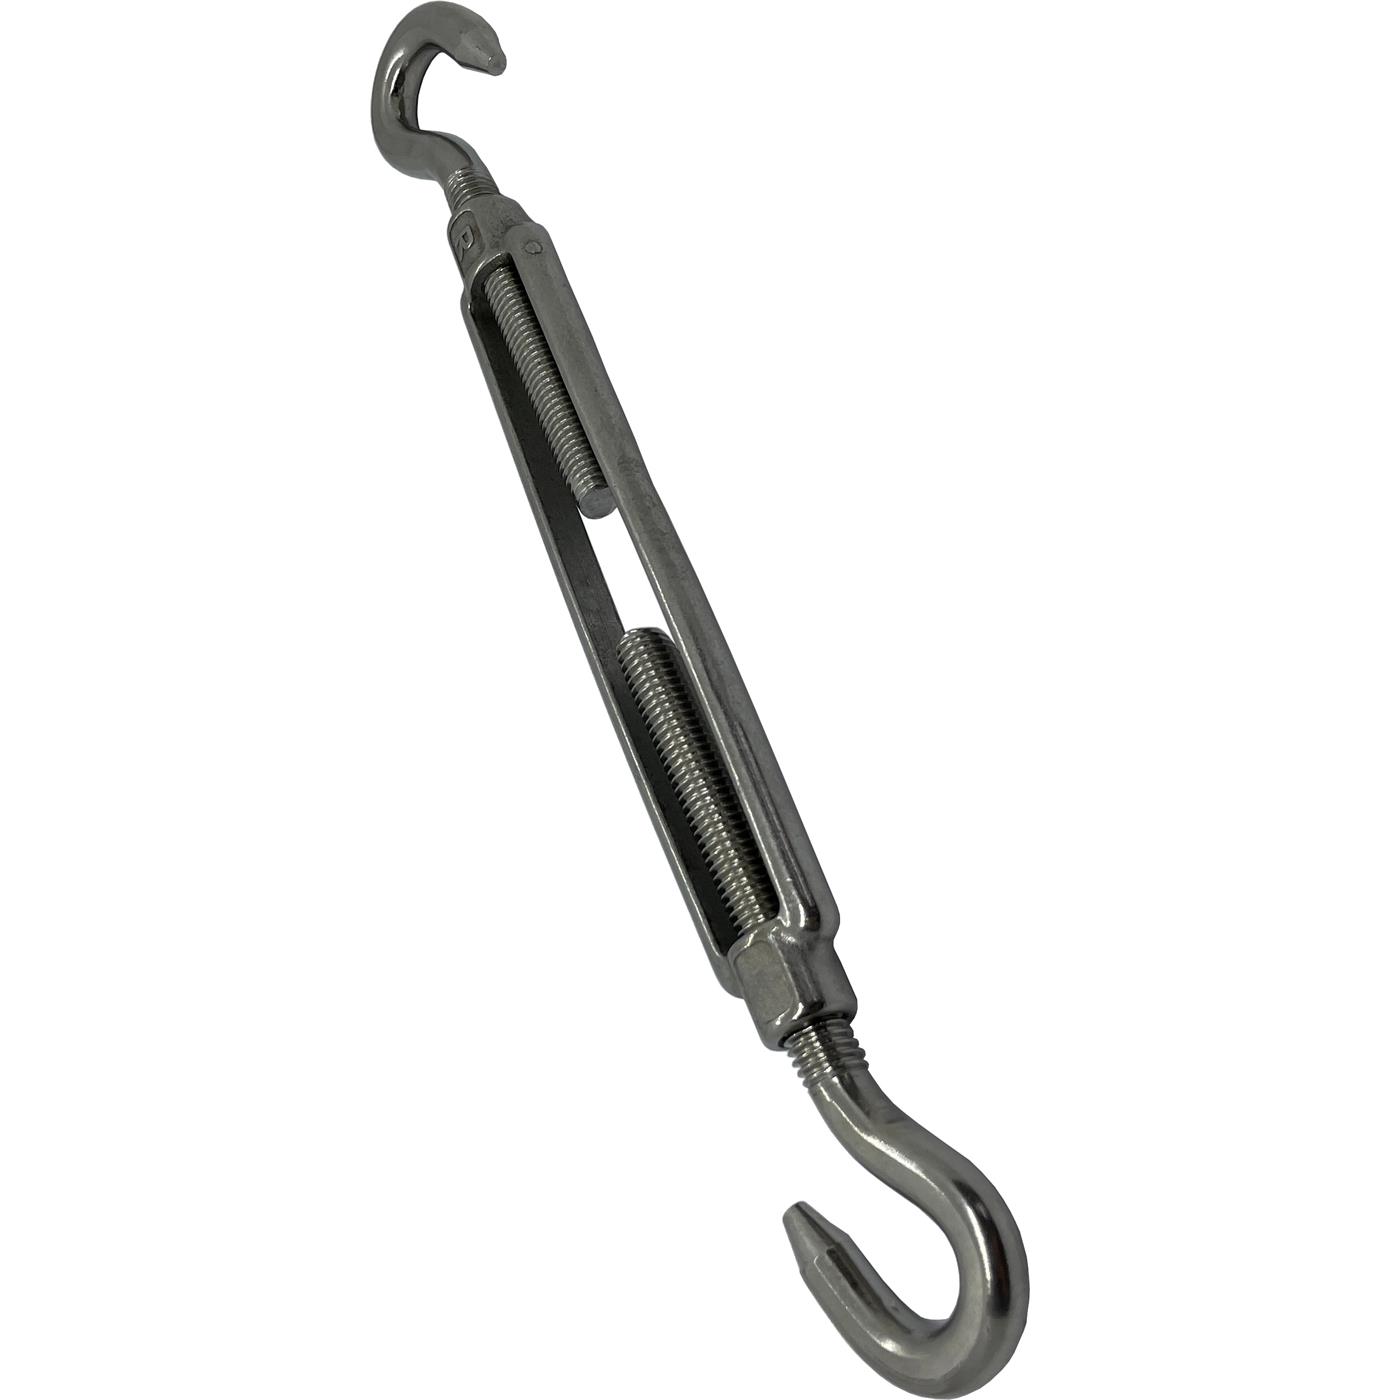 Rope tensioner Hook-Hook Stainless steel V4A 316 M5 Turnbuckle Shroud clamp